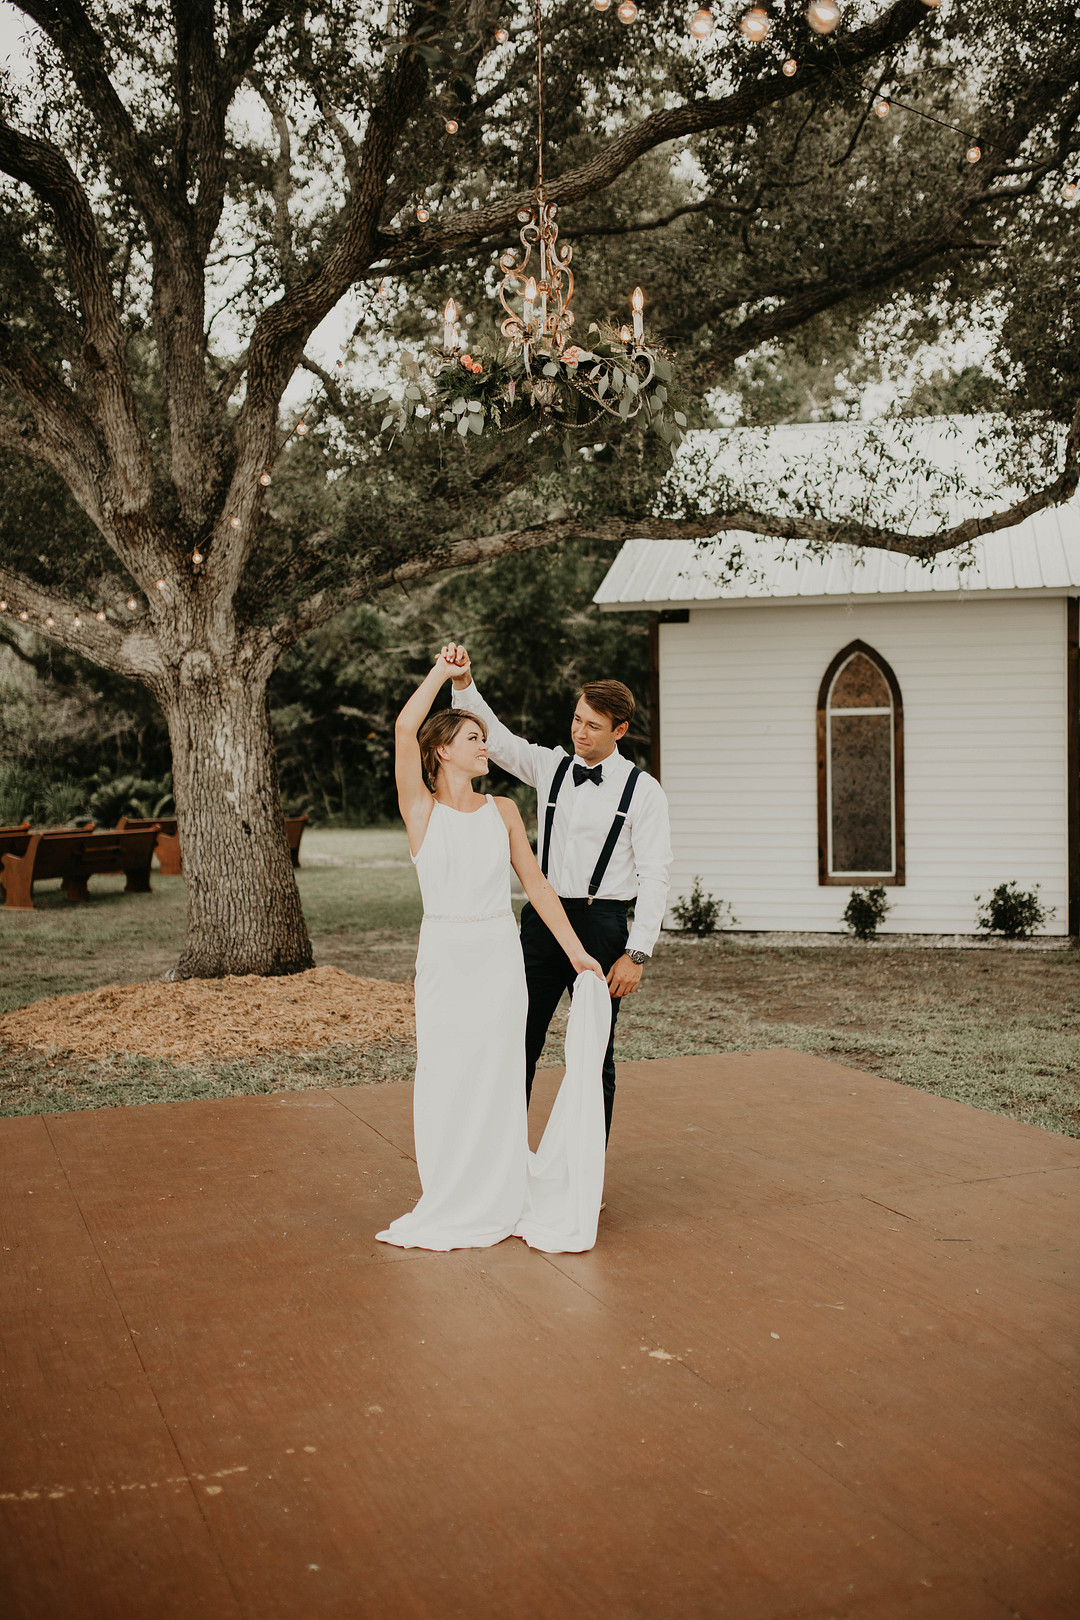 Rustic Florida Farm Wedding At Cattleya Chapel - Florida Wedding Inspiration